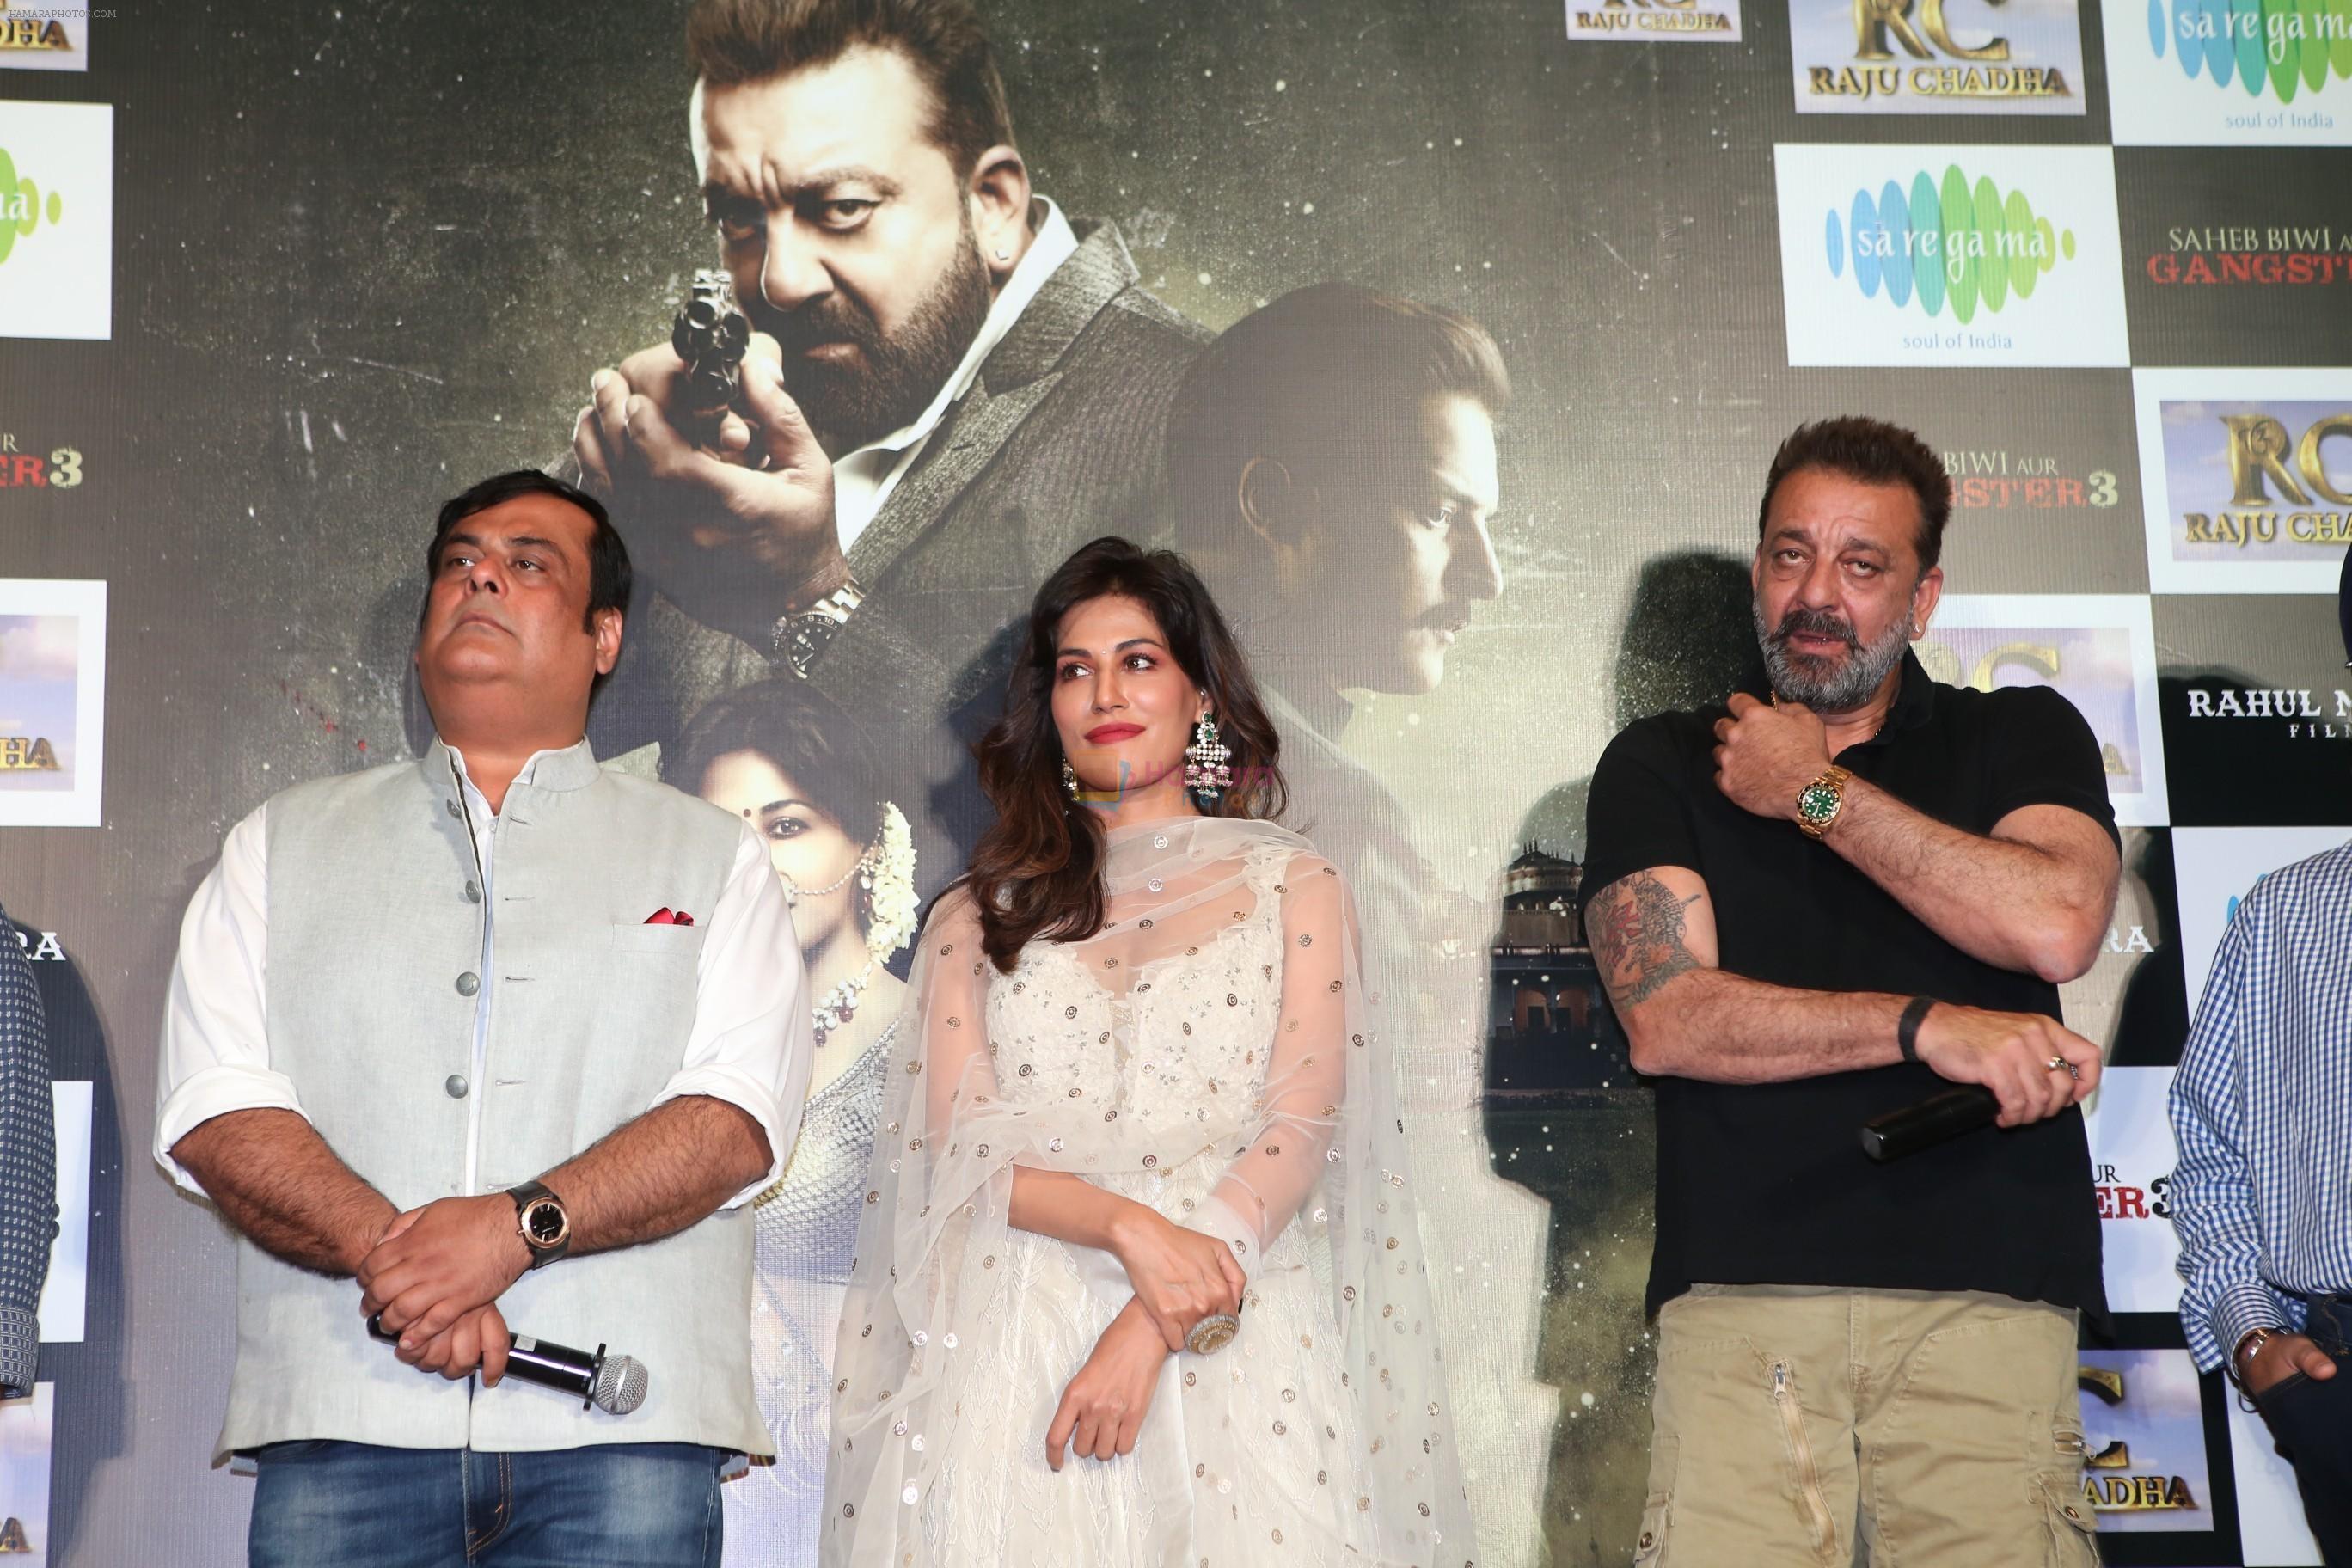 Chitrangada Singh, Sanjay Dutt at the Trailer launch of film Saheb Biwi aur Gangster 3 in pvr ecx in andheri on 29th June 2018